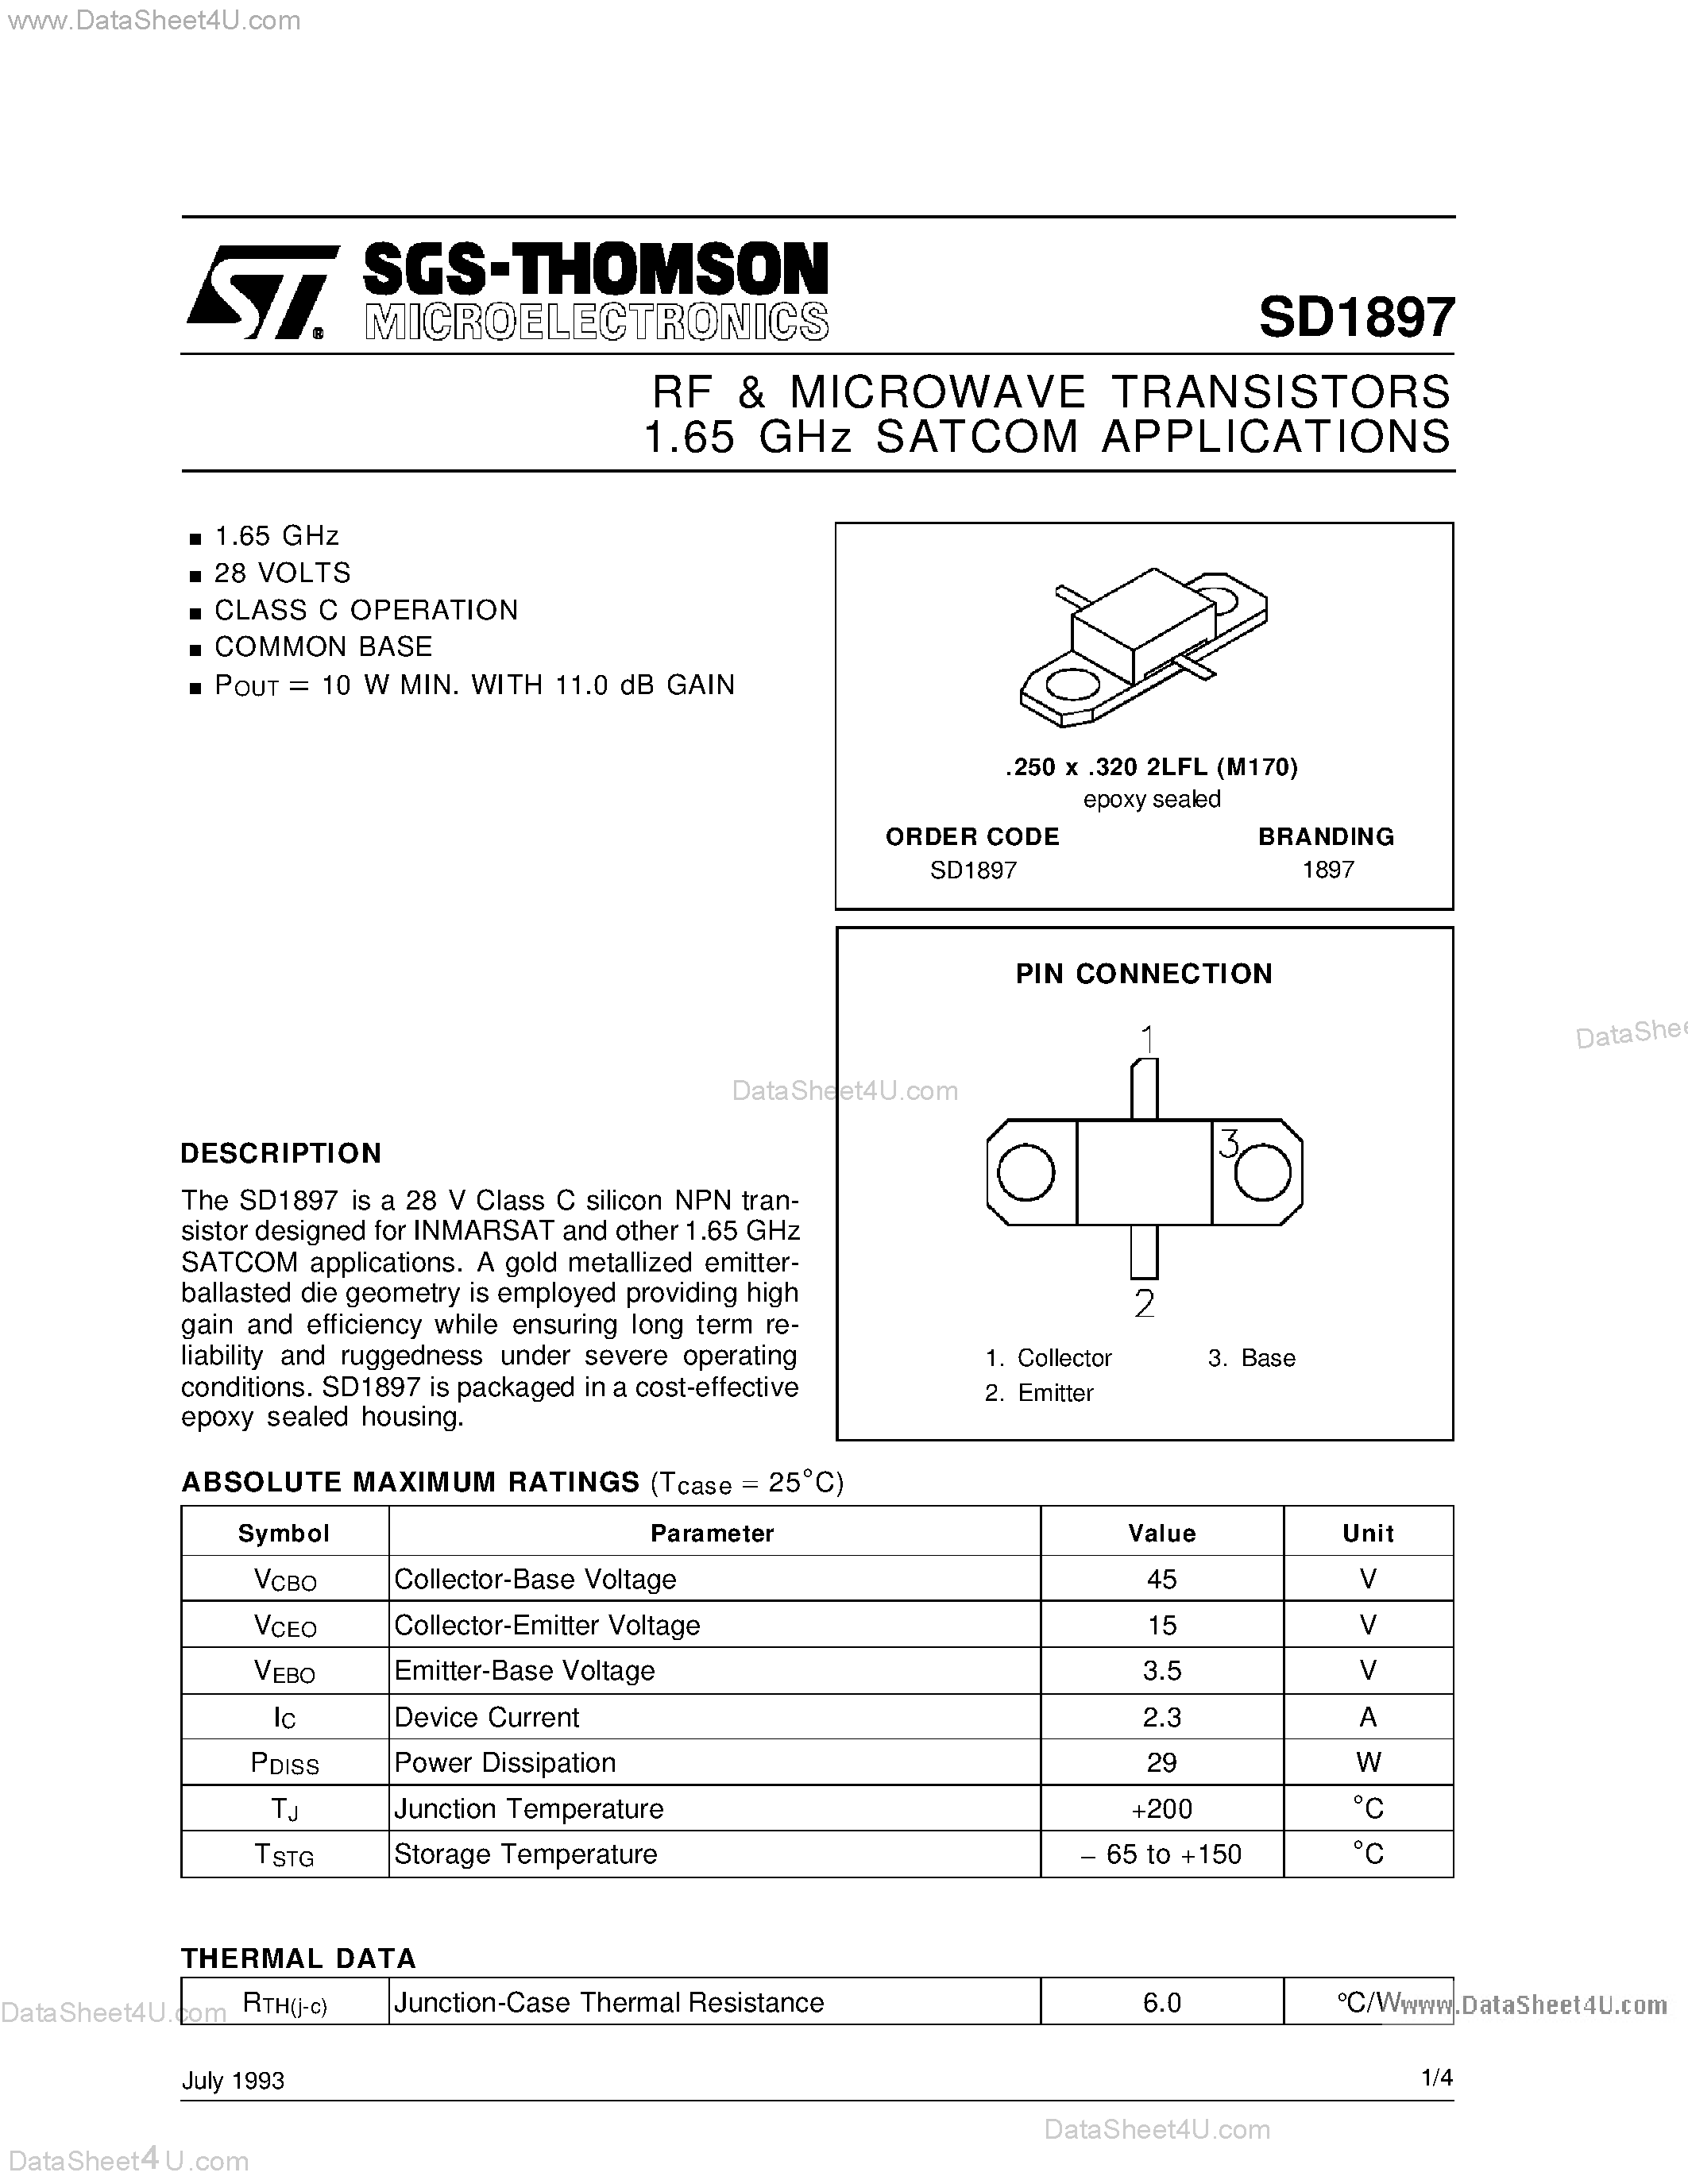 Datasheet SD1897 - RF & MICROWAVE TRANSISTORS 1.65 GHz SATCOM APPLICATIONS page 1